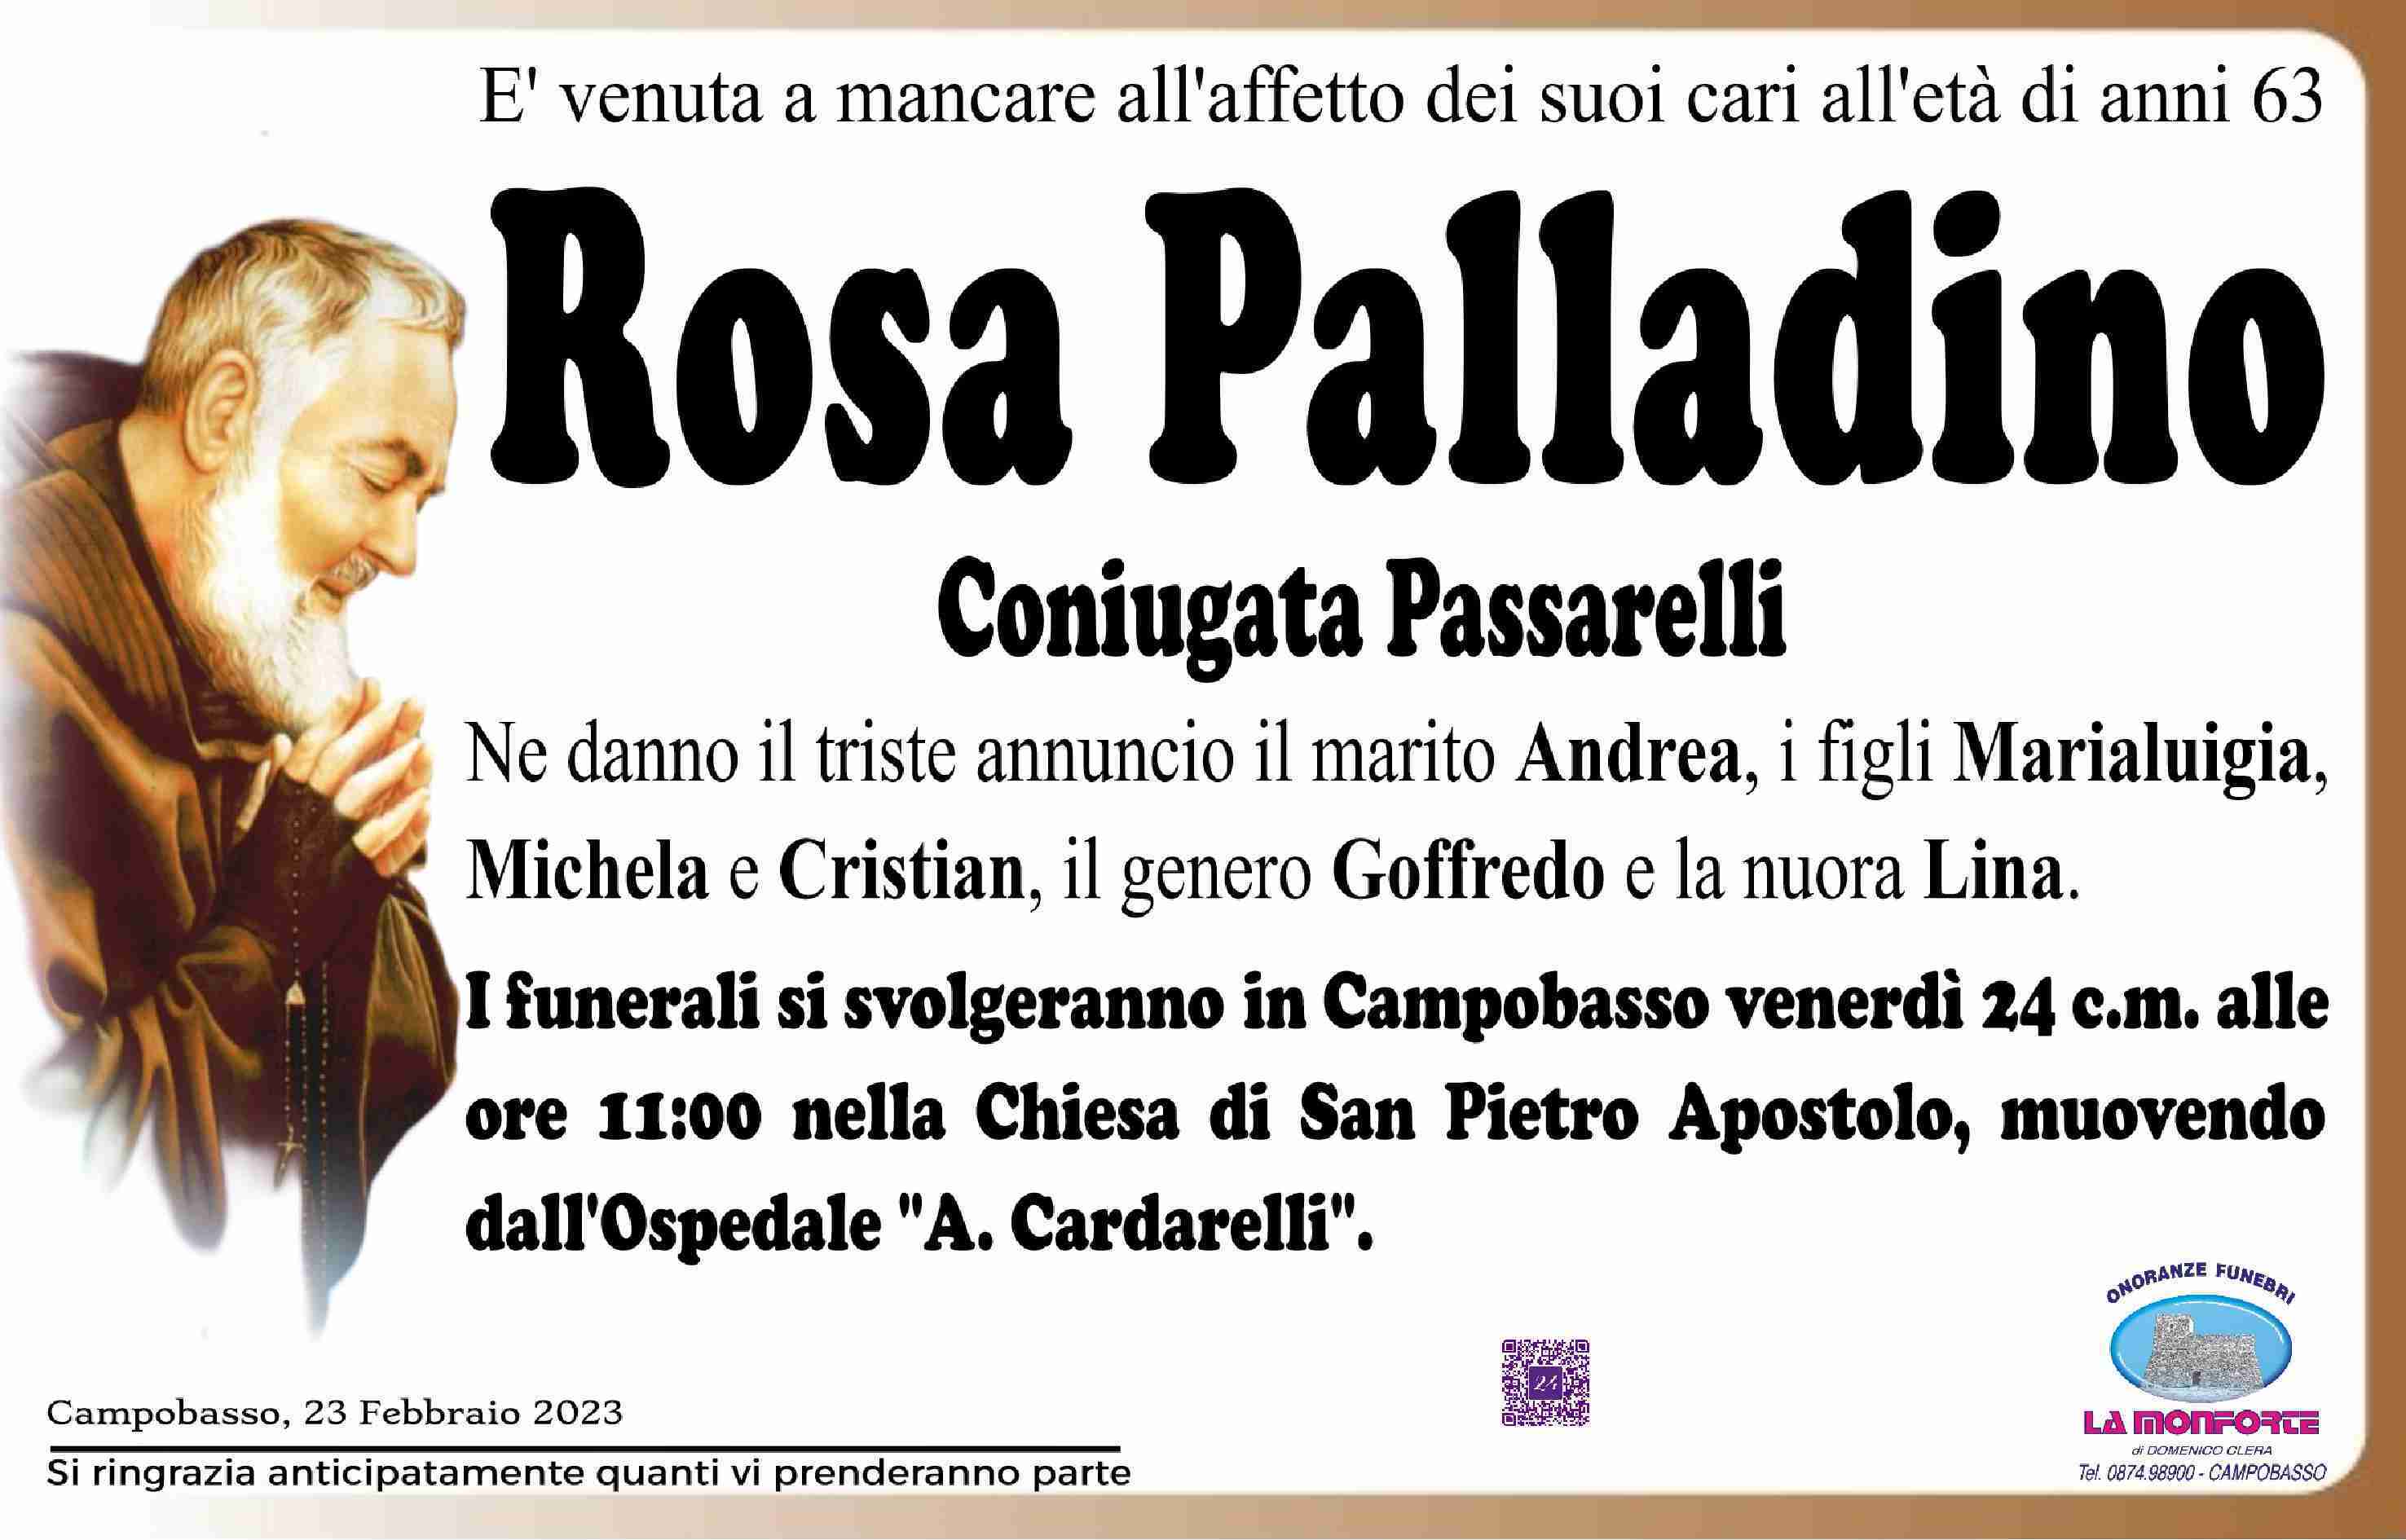 Rosa Palladino